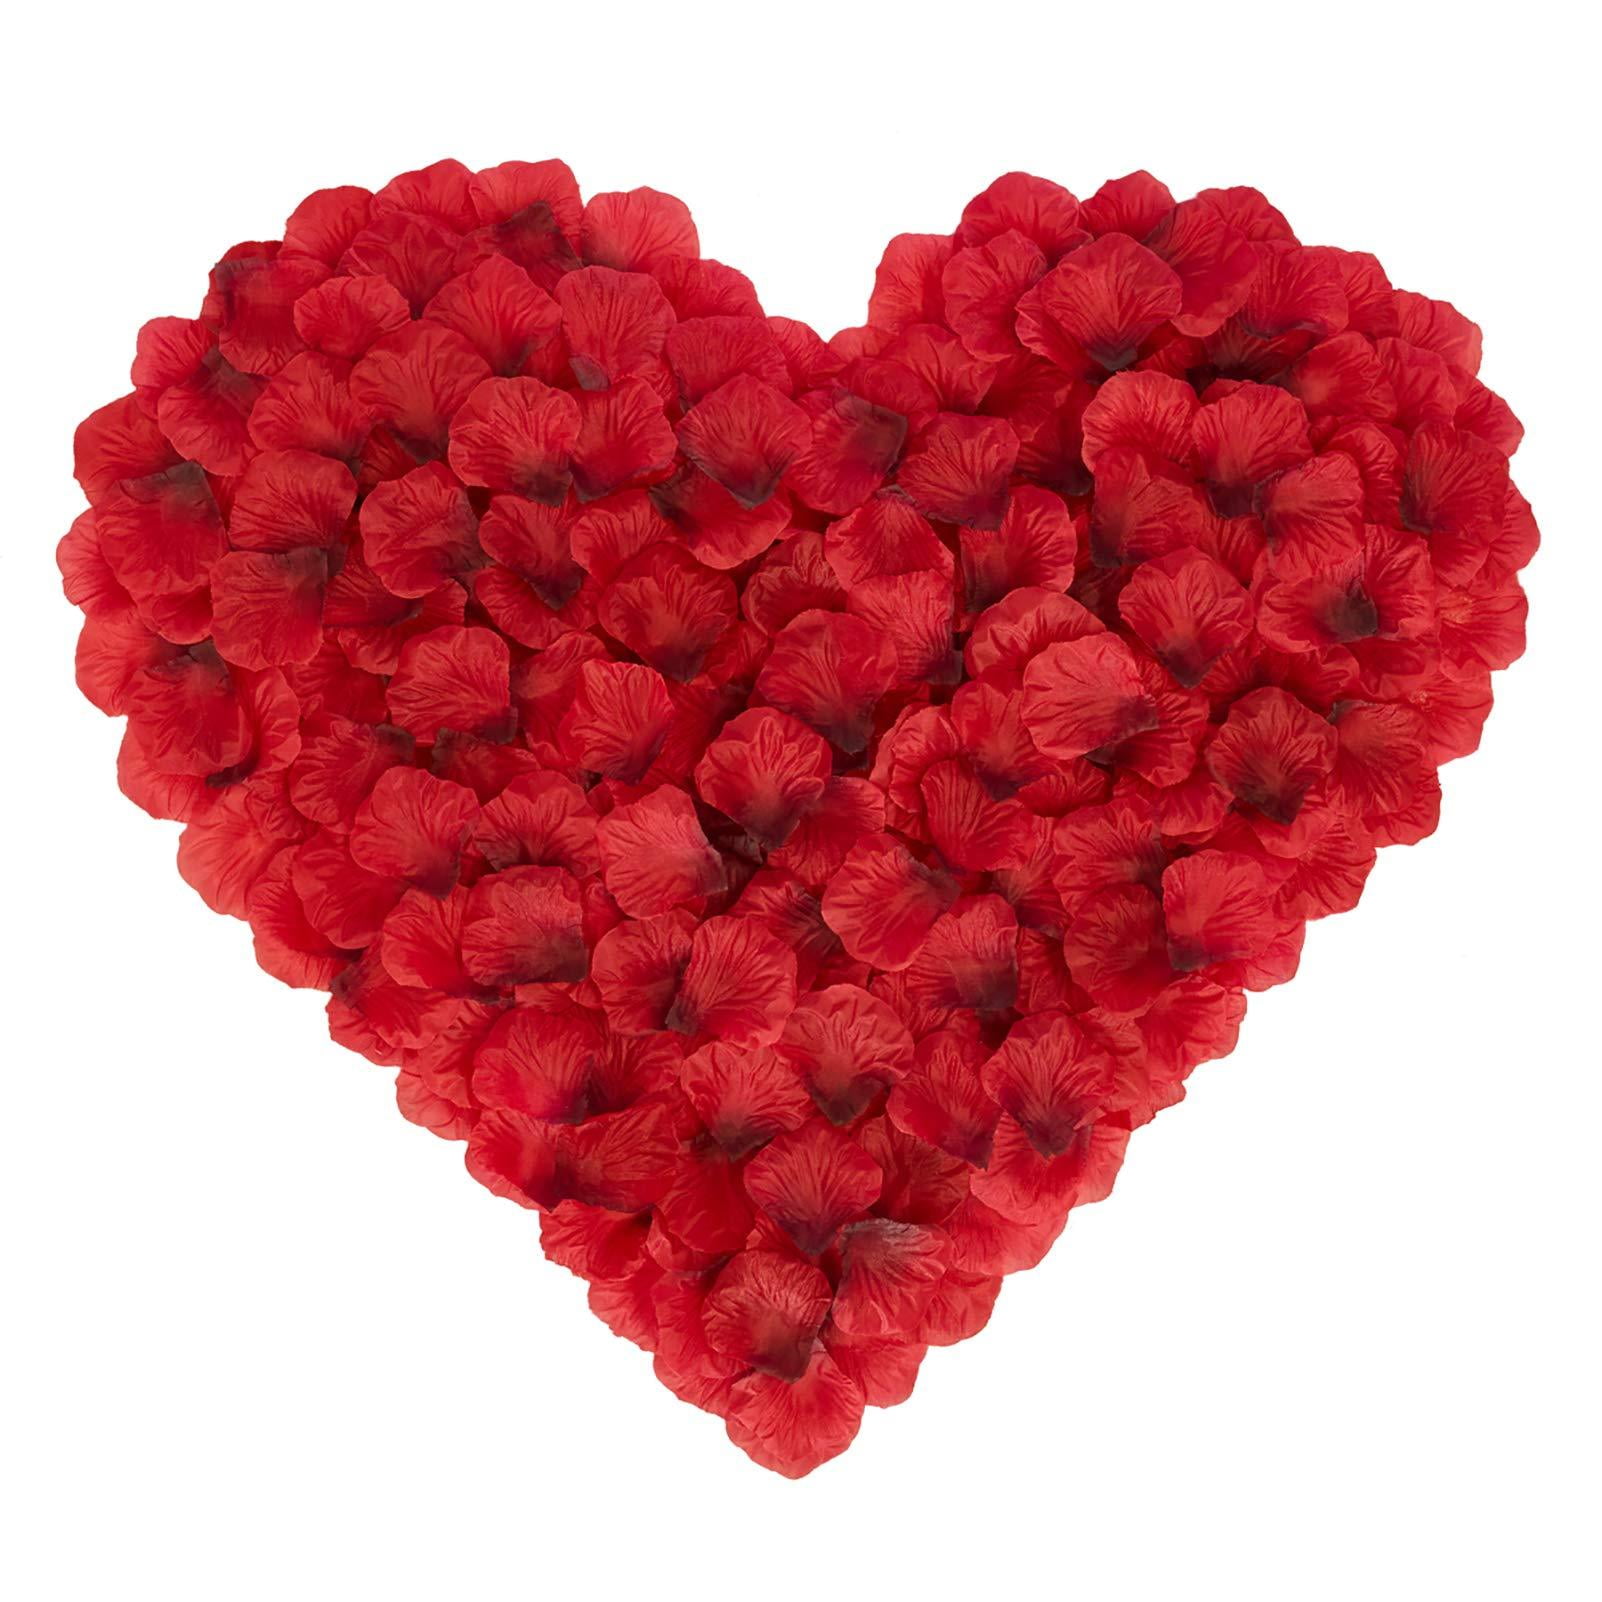 BESKIT 3000 Pieces Dark Red Rose Petals Artificial Flower Silk Petals for Val... 